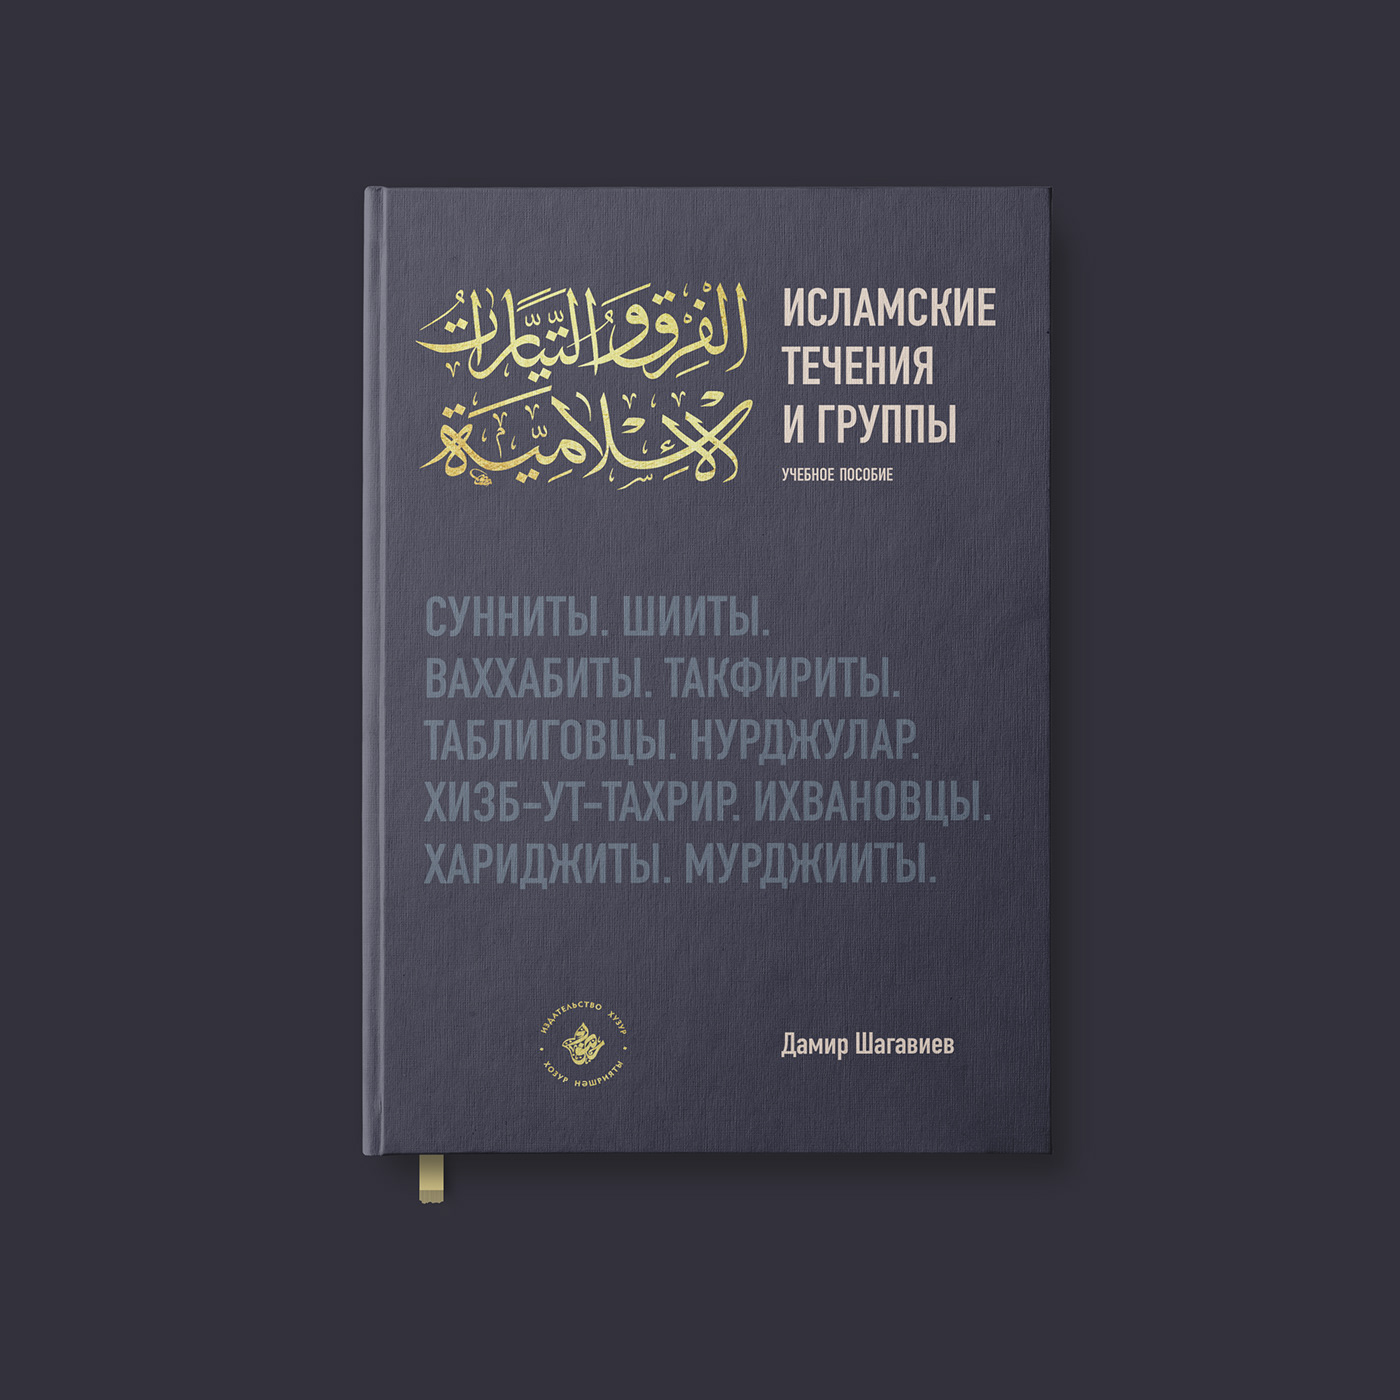 arabic arabic calligraphy book covers Calligraphy   design handwritten